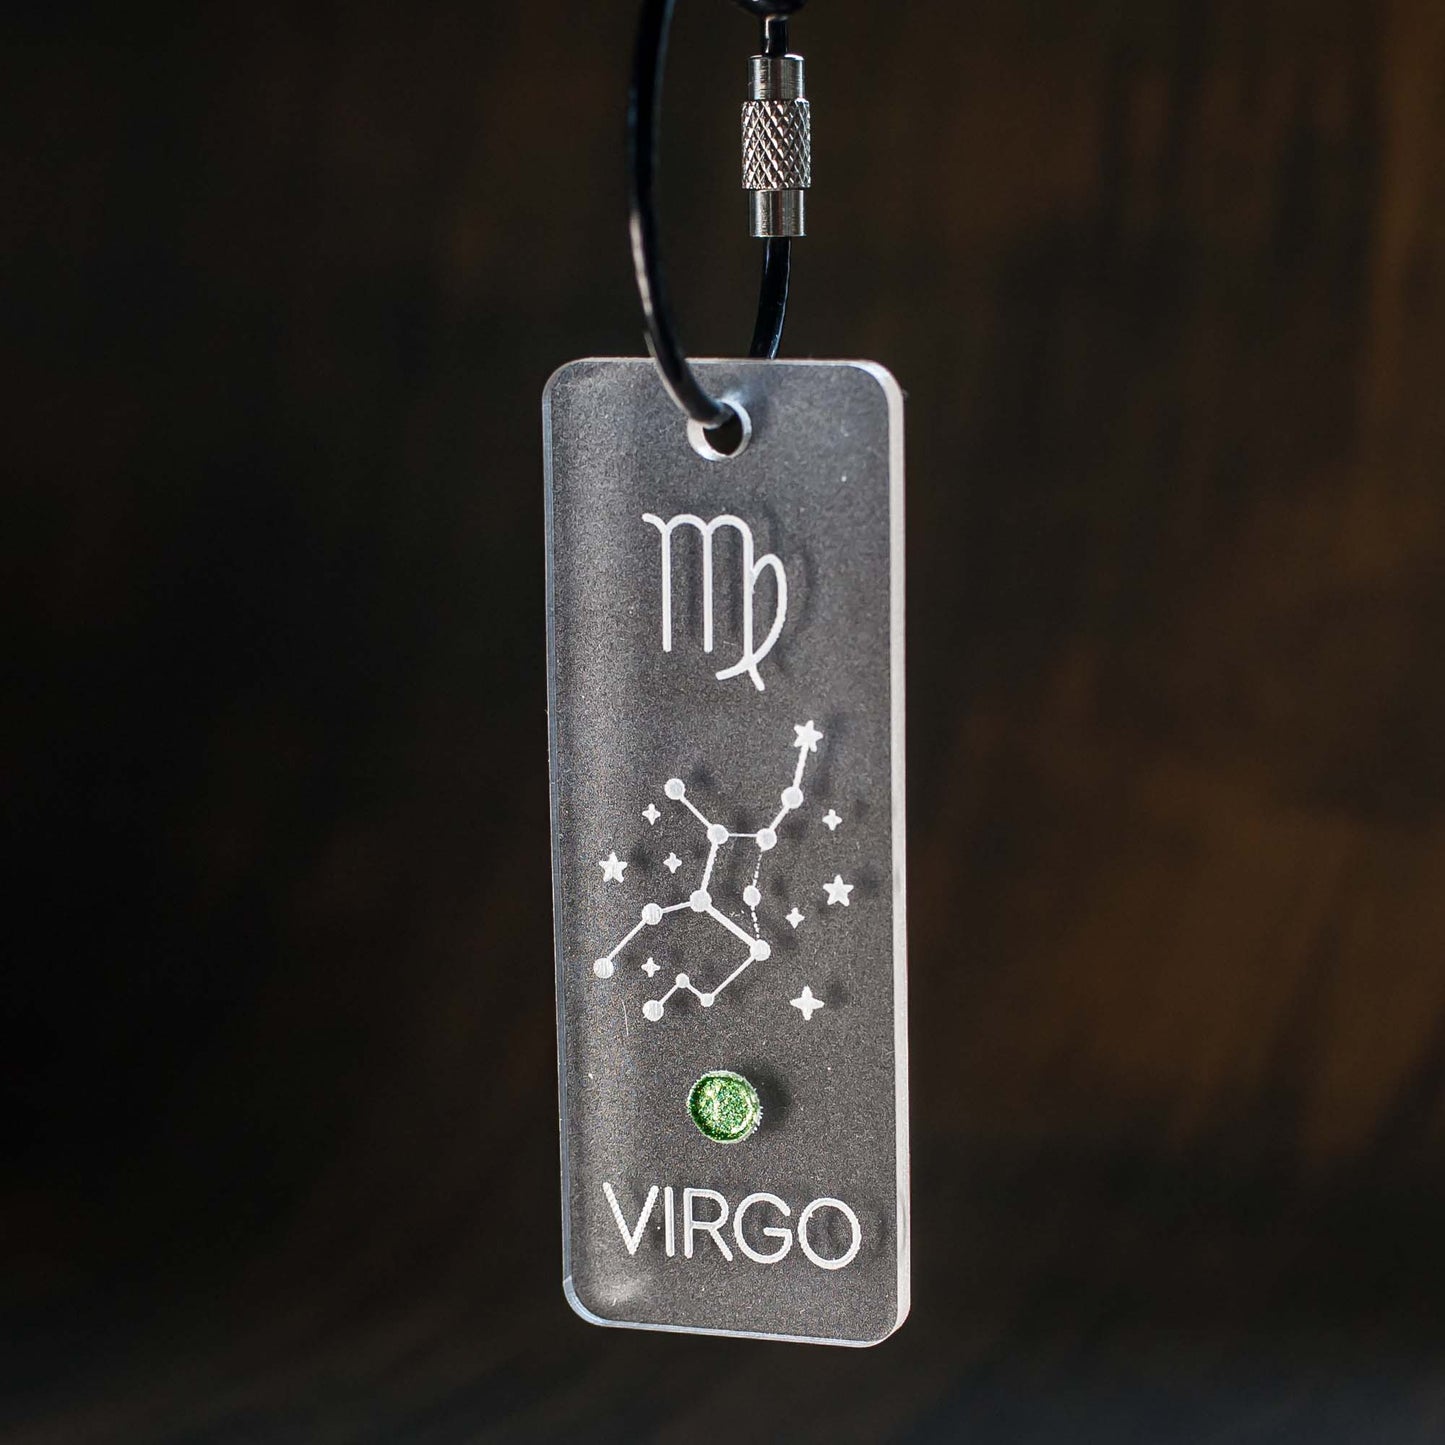 Birth Stone Keychain - Virgo / Peridot - by LeeMo Designs in Bend, Oregon